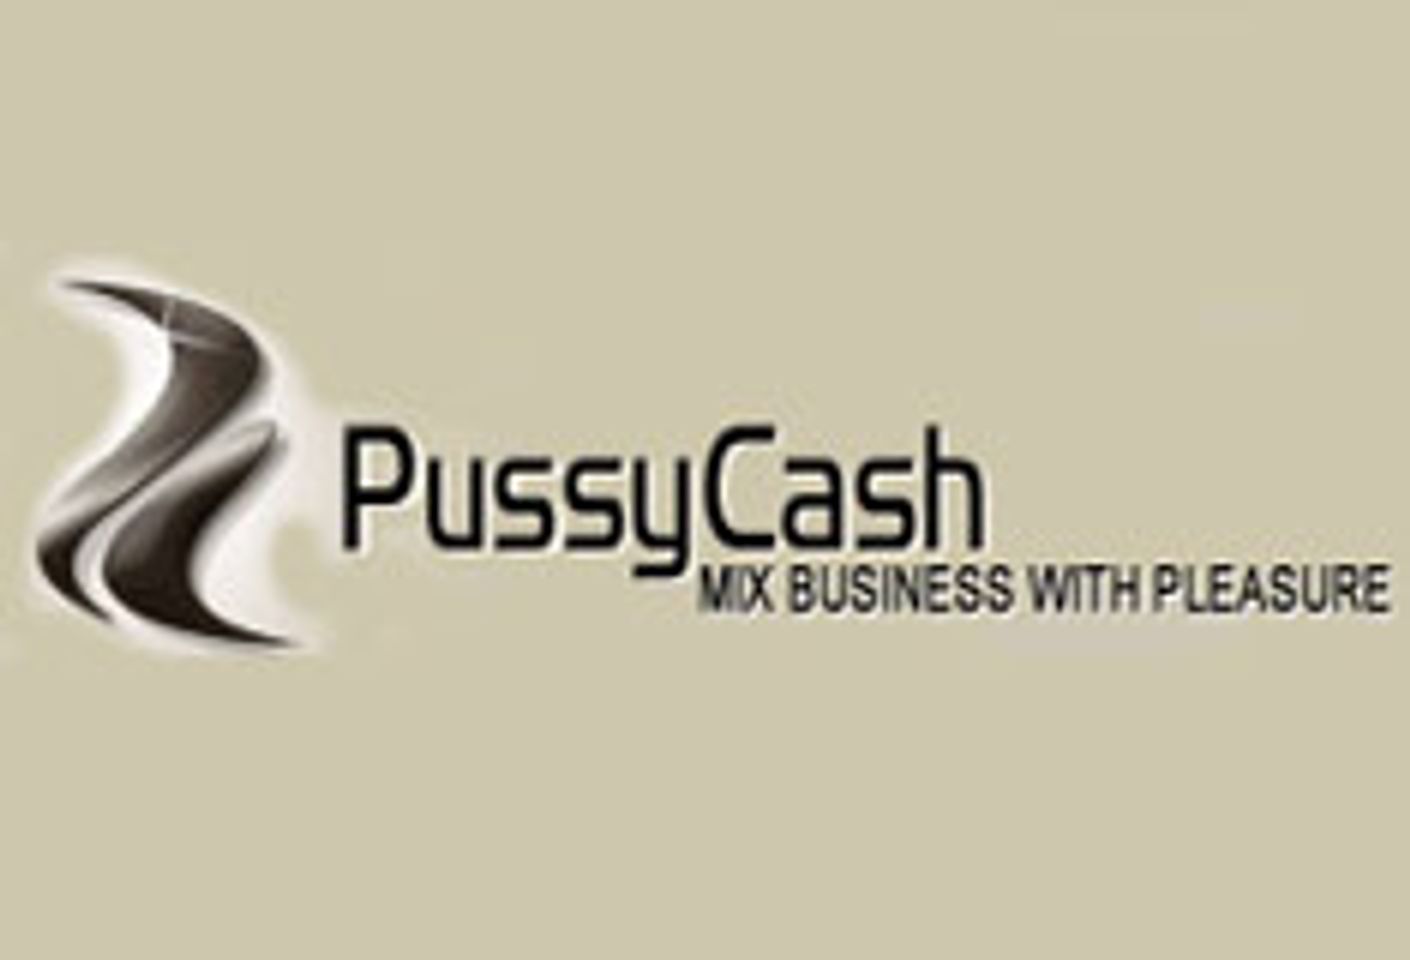 PussyCash/ImLive.com Contest Sending 100 Winners to Internext